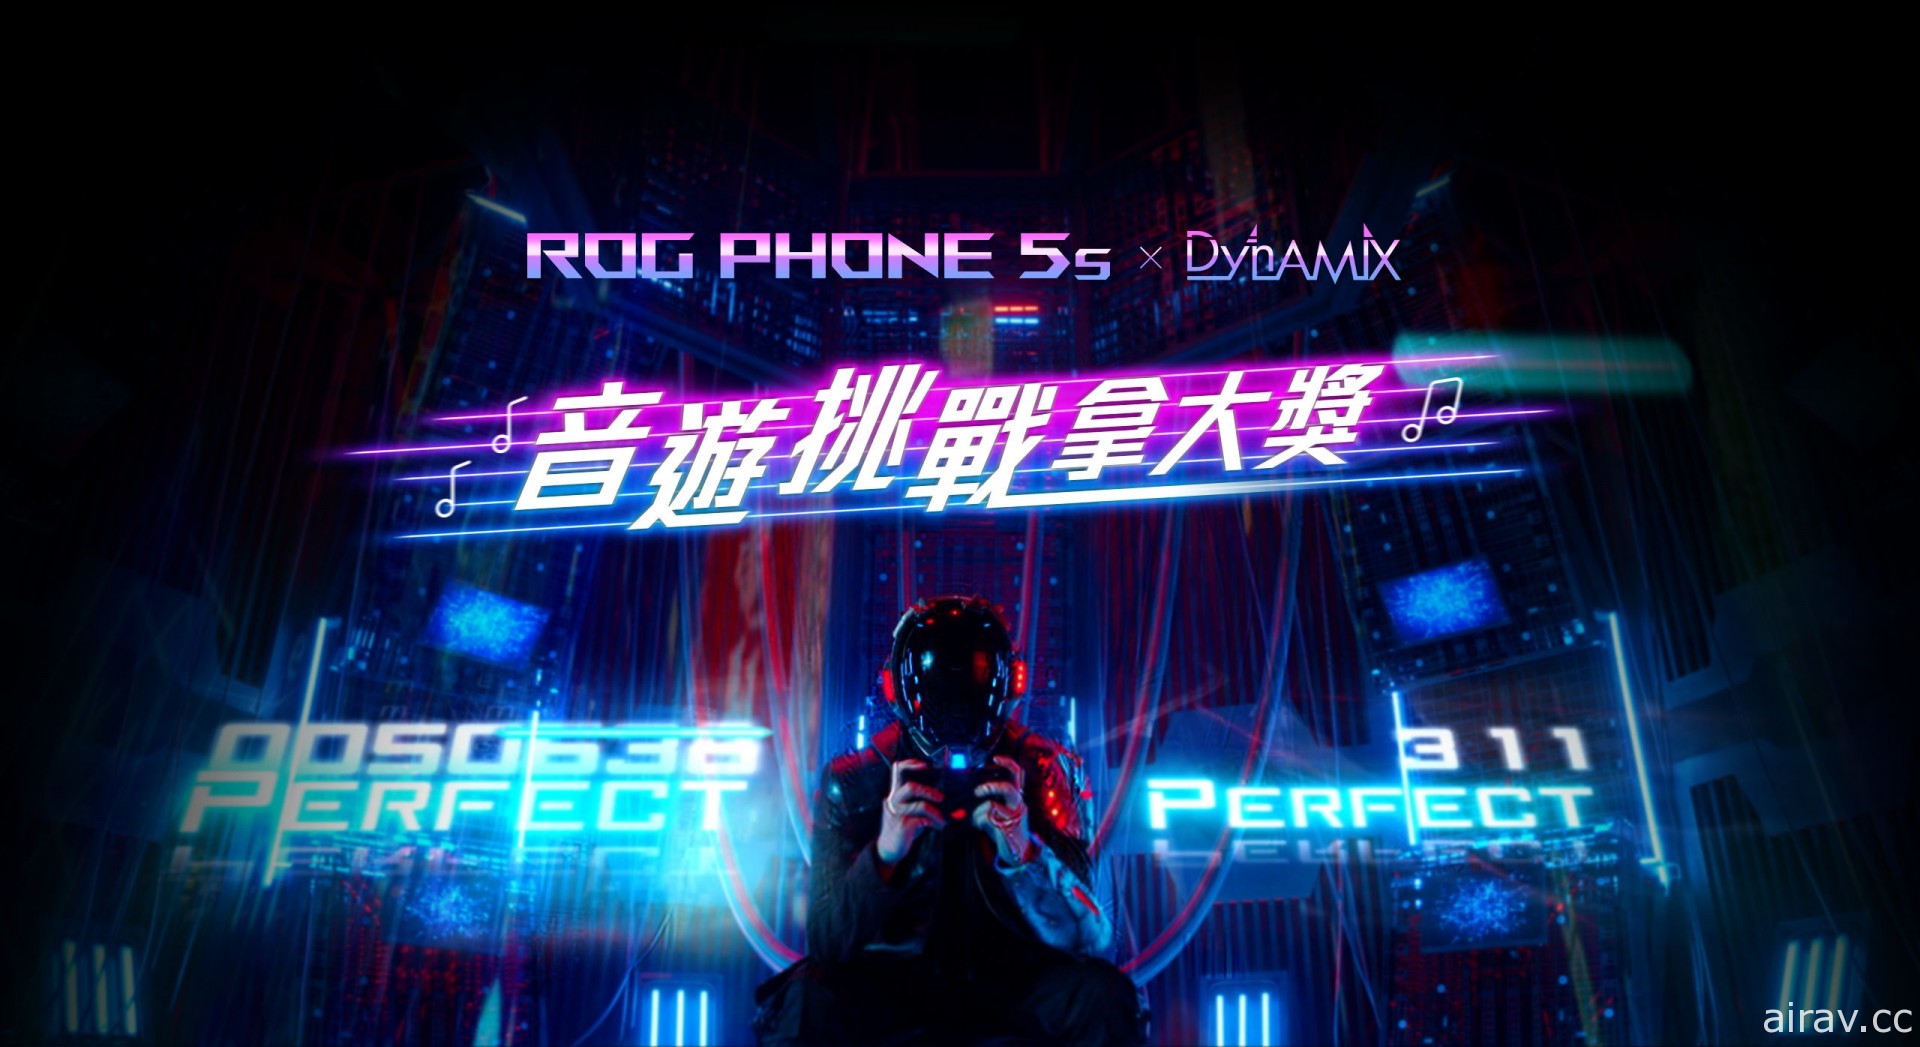 ROG Phone 5s 9 月 15 日電信開賣 與音樂遊戲《Dynamix》合作推出主題曲「RE:IGNITE」